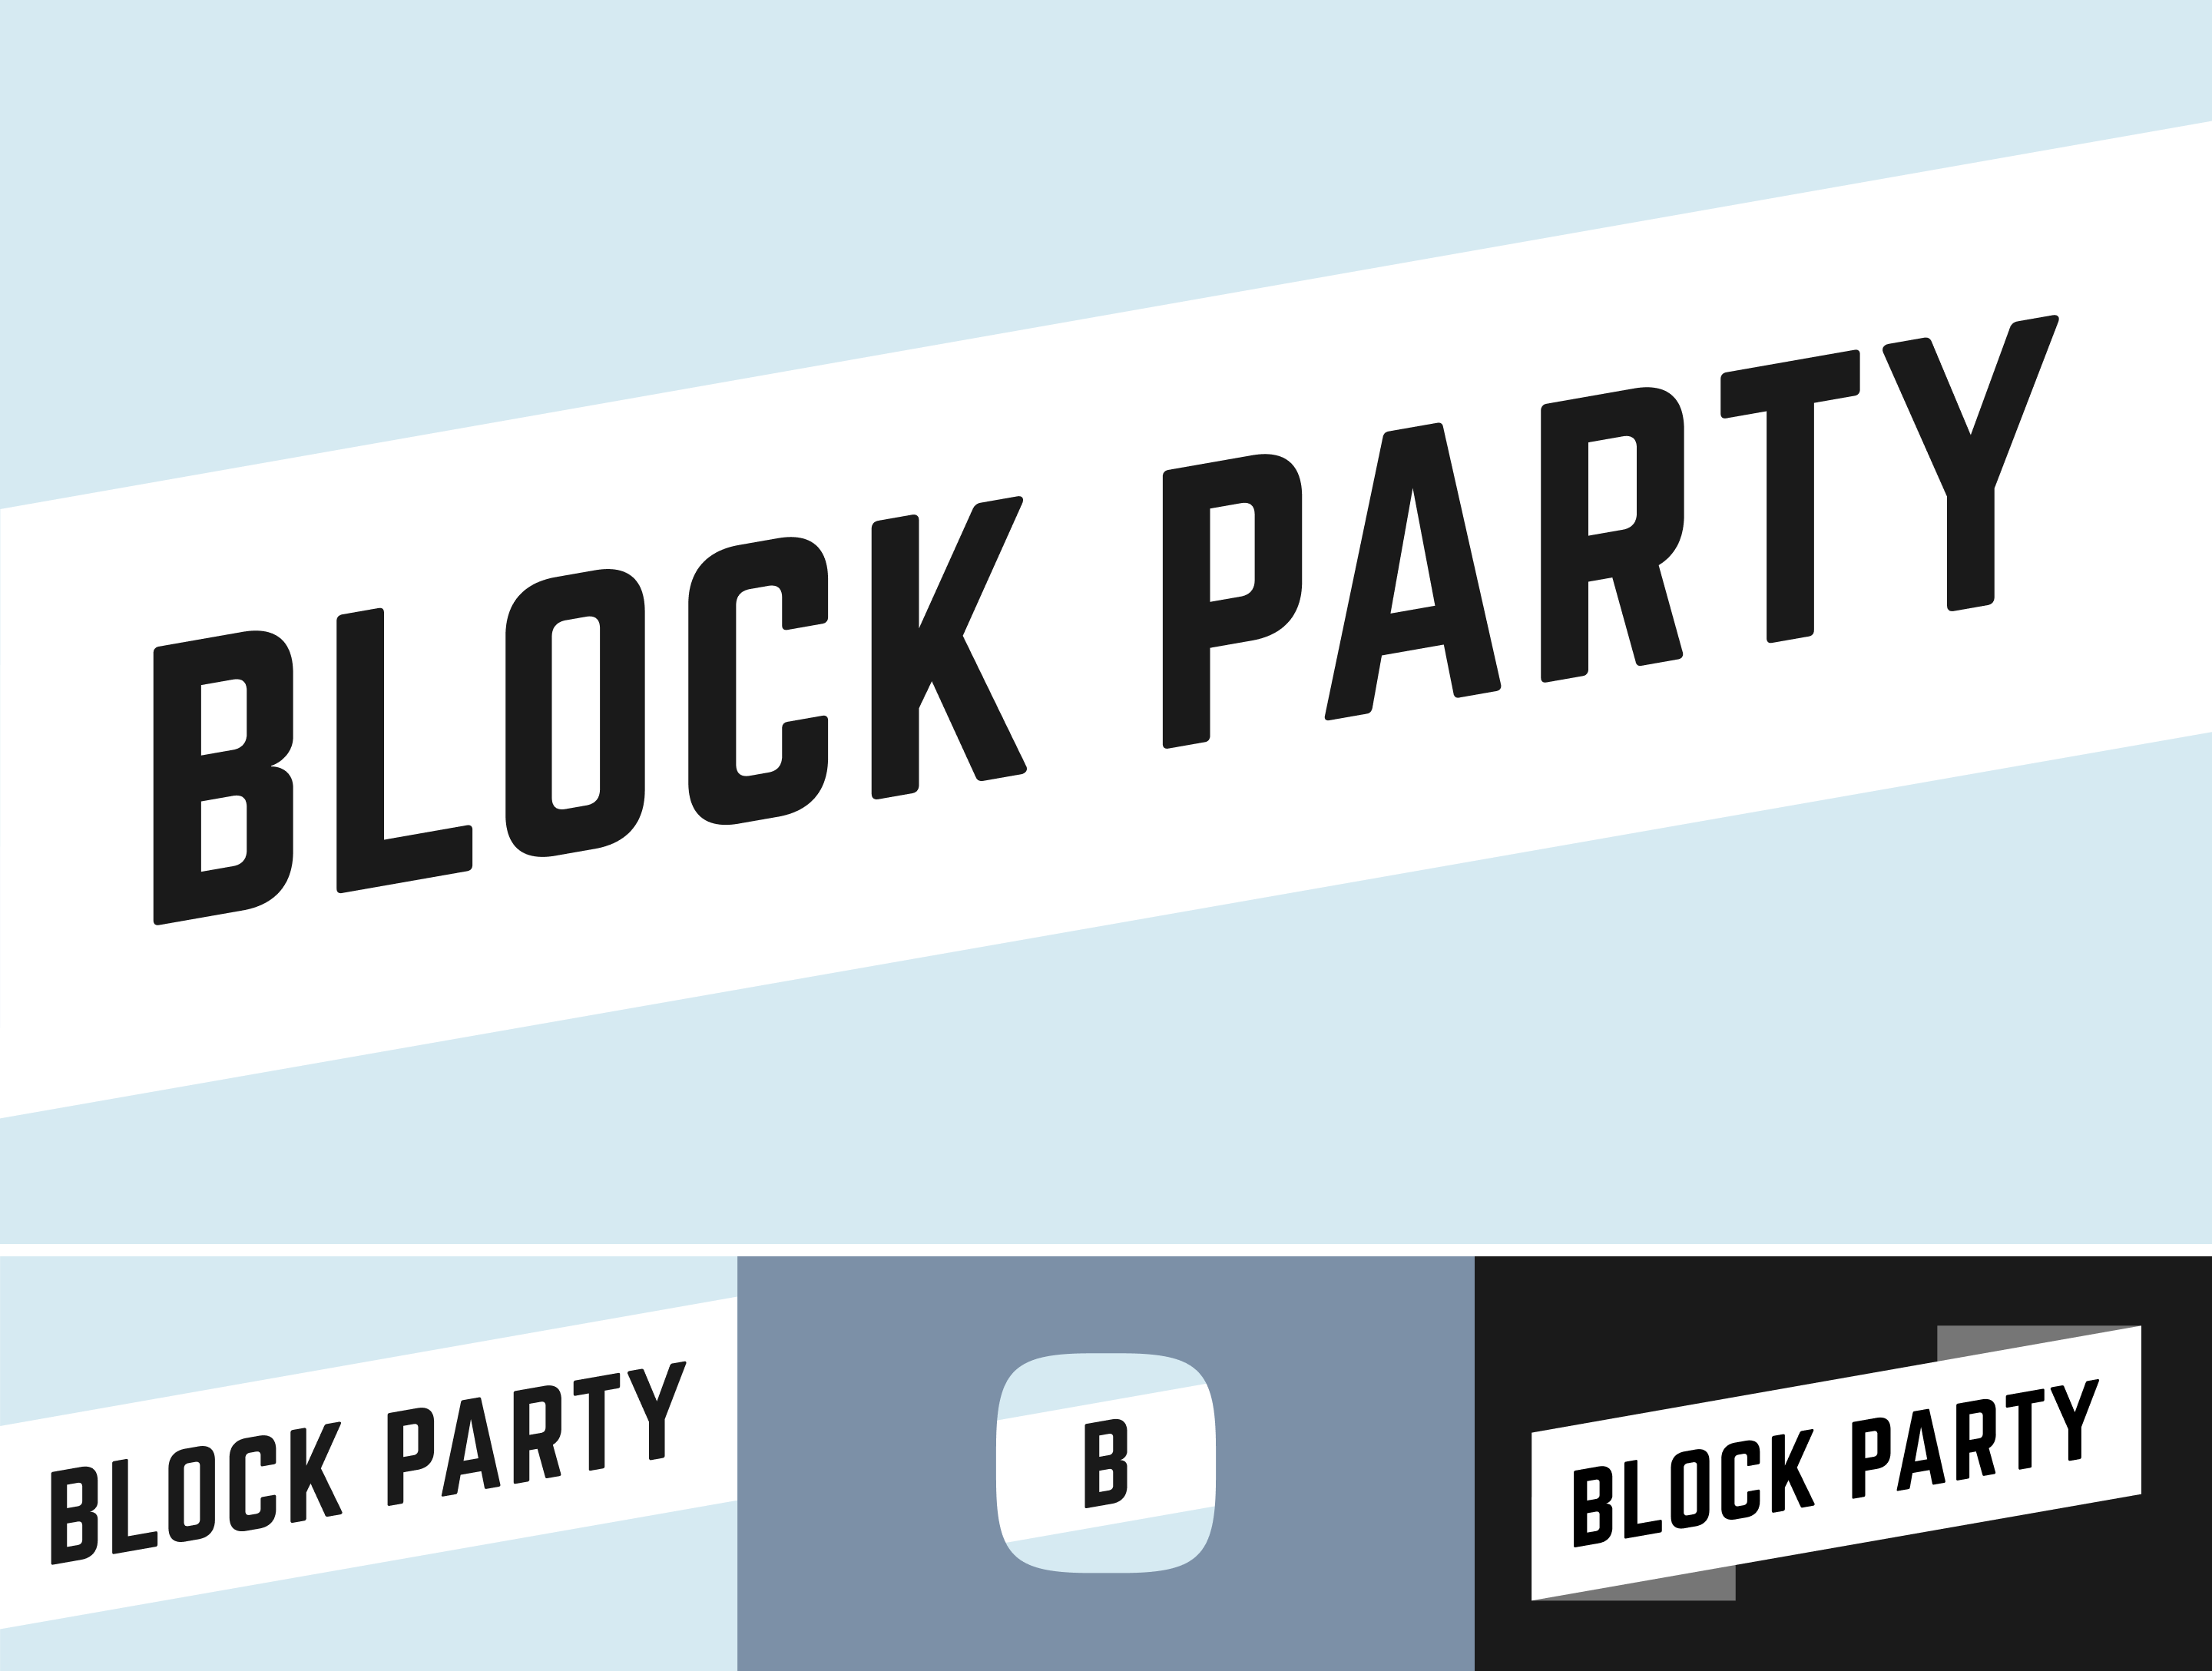 The Block Party logo